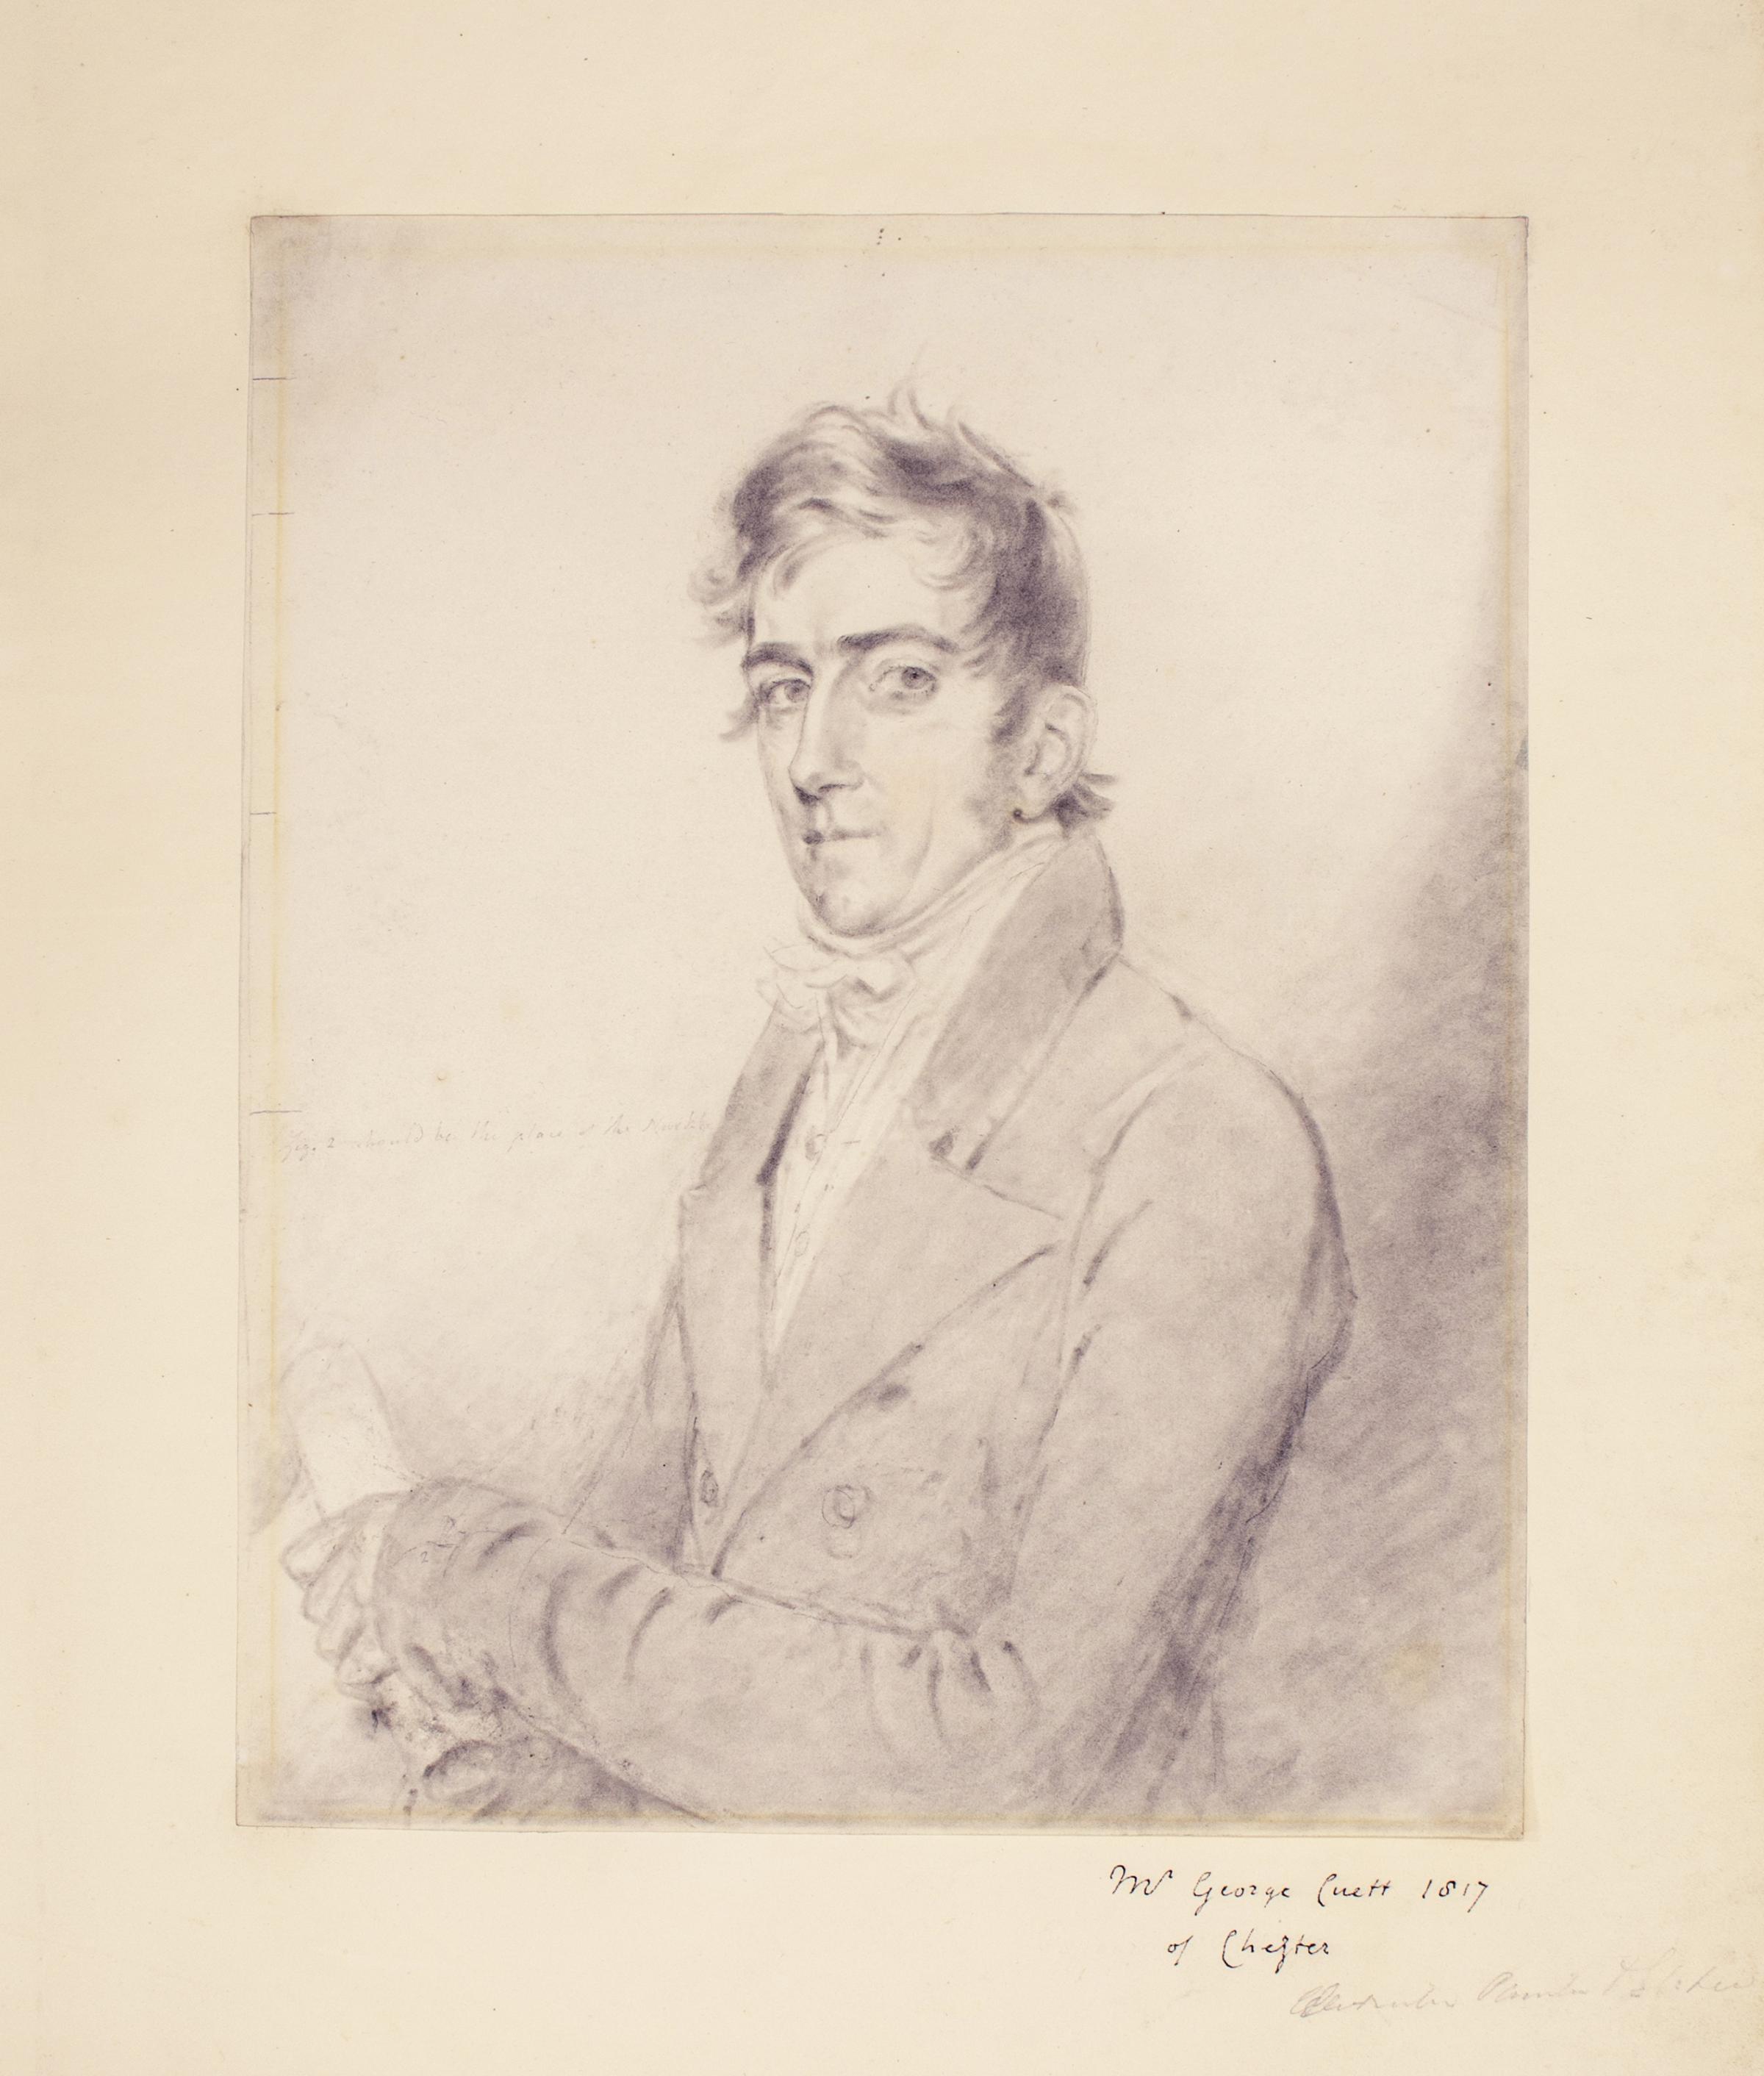 The engraver George Cuitt, by John Downman, 1817. (Grosvenor Museum, Chester)